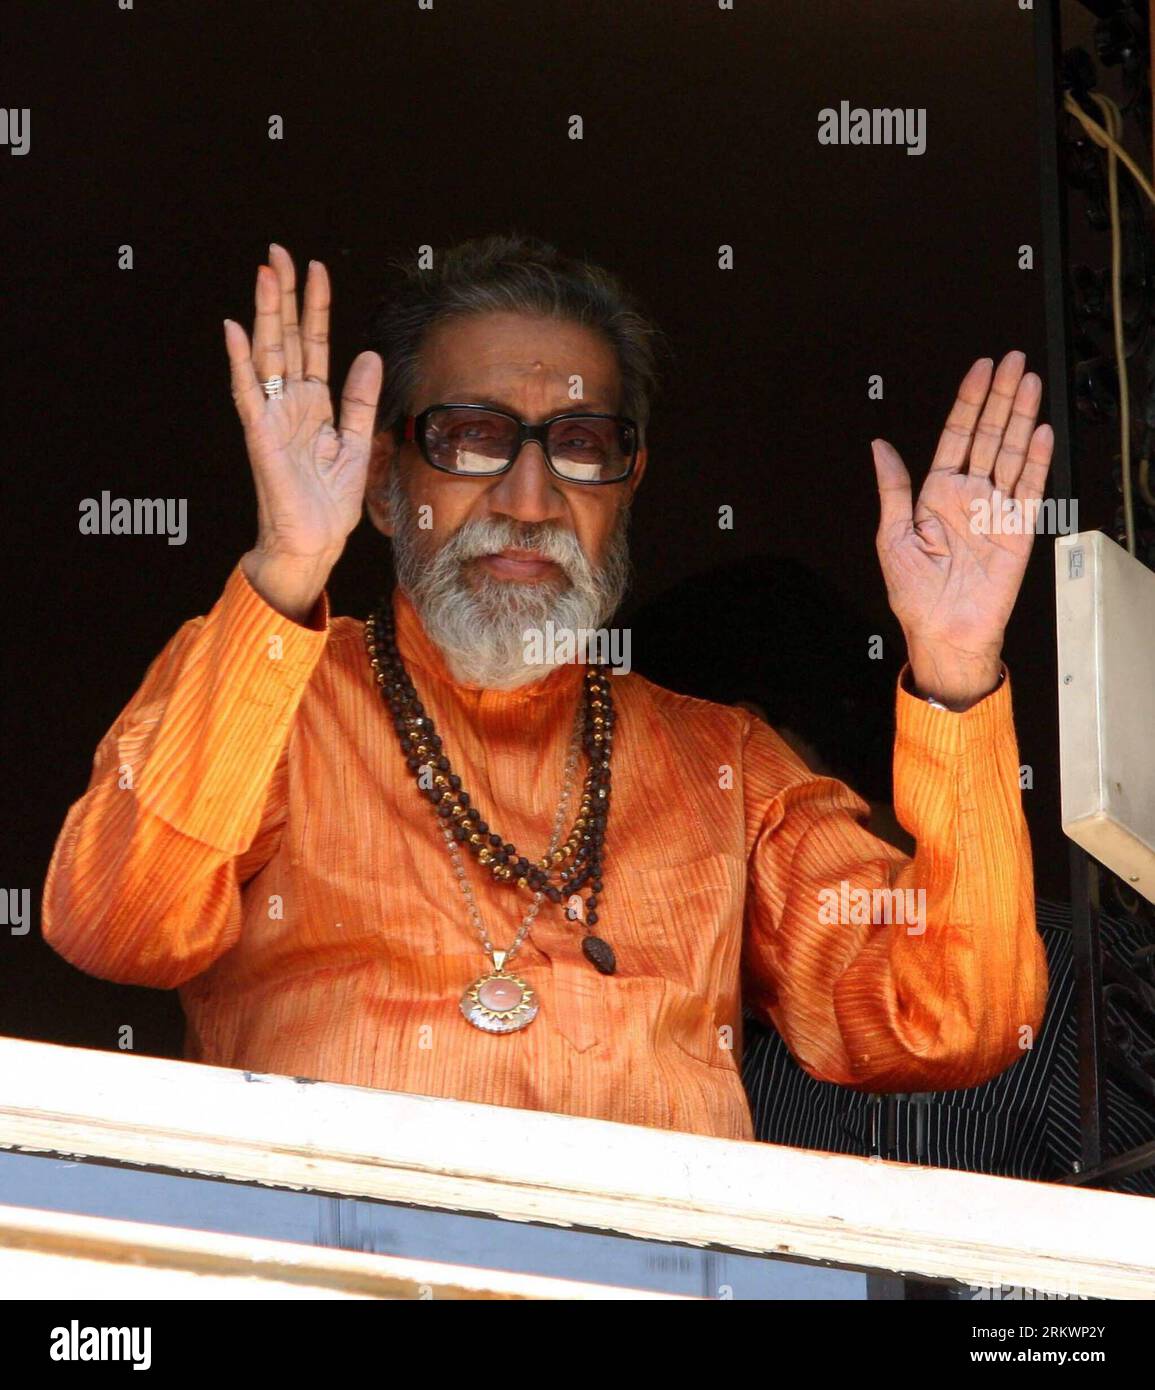 Bildnummer: 58715578  Datum: 23.01.2010  Copyright: imago/Xinhua (121118) -- MUMBAI, Nov. 18, 2012 (Xinhua) -- This file photo taken on Jan. 23, 2010 shows Bal Thackeray, chief of the Shiv Sena Party, waving hands to supporters in Mumbai, India. Bal Thackeray died in Mumbai after an illness Saturday. (Xinhua/Stringer) INDIA-MUMBAI-POLITICS-THACKERAY-DEATH PUBLICATIONxNOTxINxCHN People Politik Religion x1x xds 2010 quadrat     58715578 Date 23 01 2010 Copyright Imago XINHUA  Mumbai Nov 18 2012 XINHUA This File Photo Taken ON Jan 23 2010 Shows Bal Thackeray Chief of The Shiv Sena Party Waving Ha Stock Photo